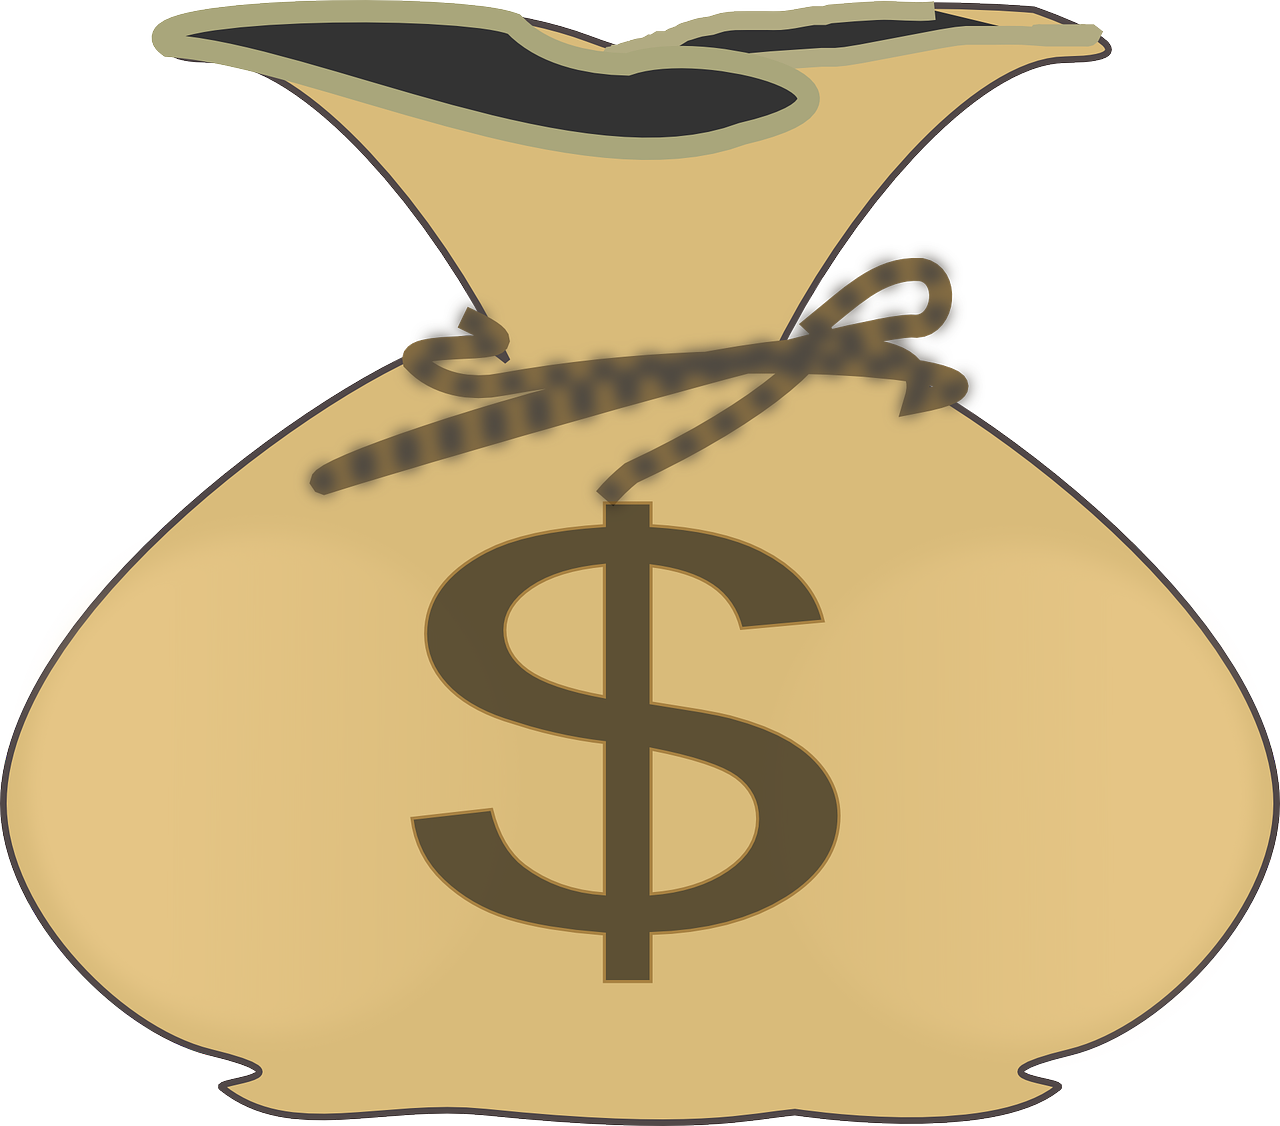 Download free photo of Money,bag,cash,sack,dollars - from needpix.com